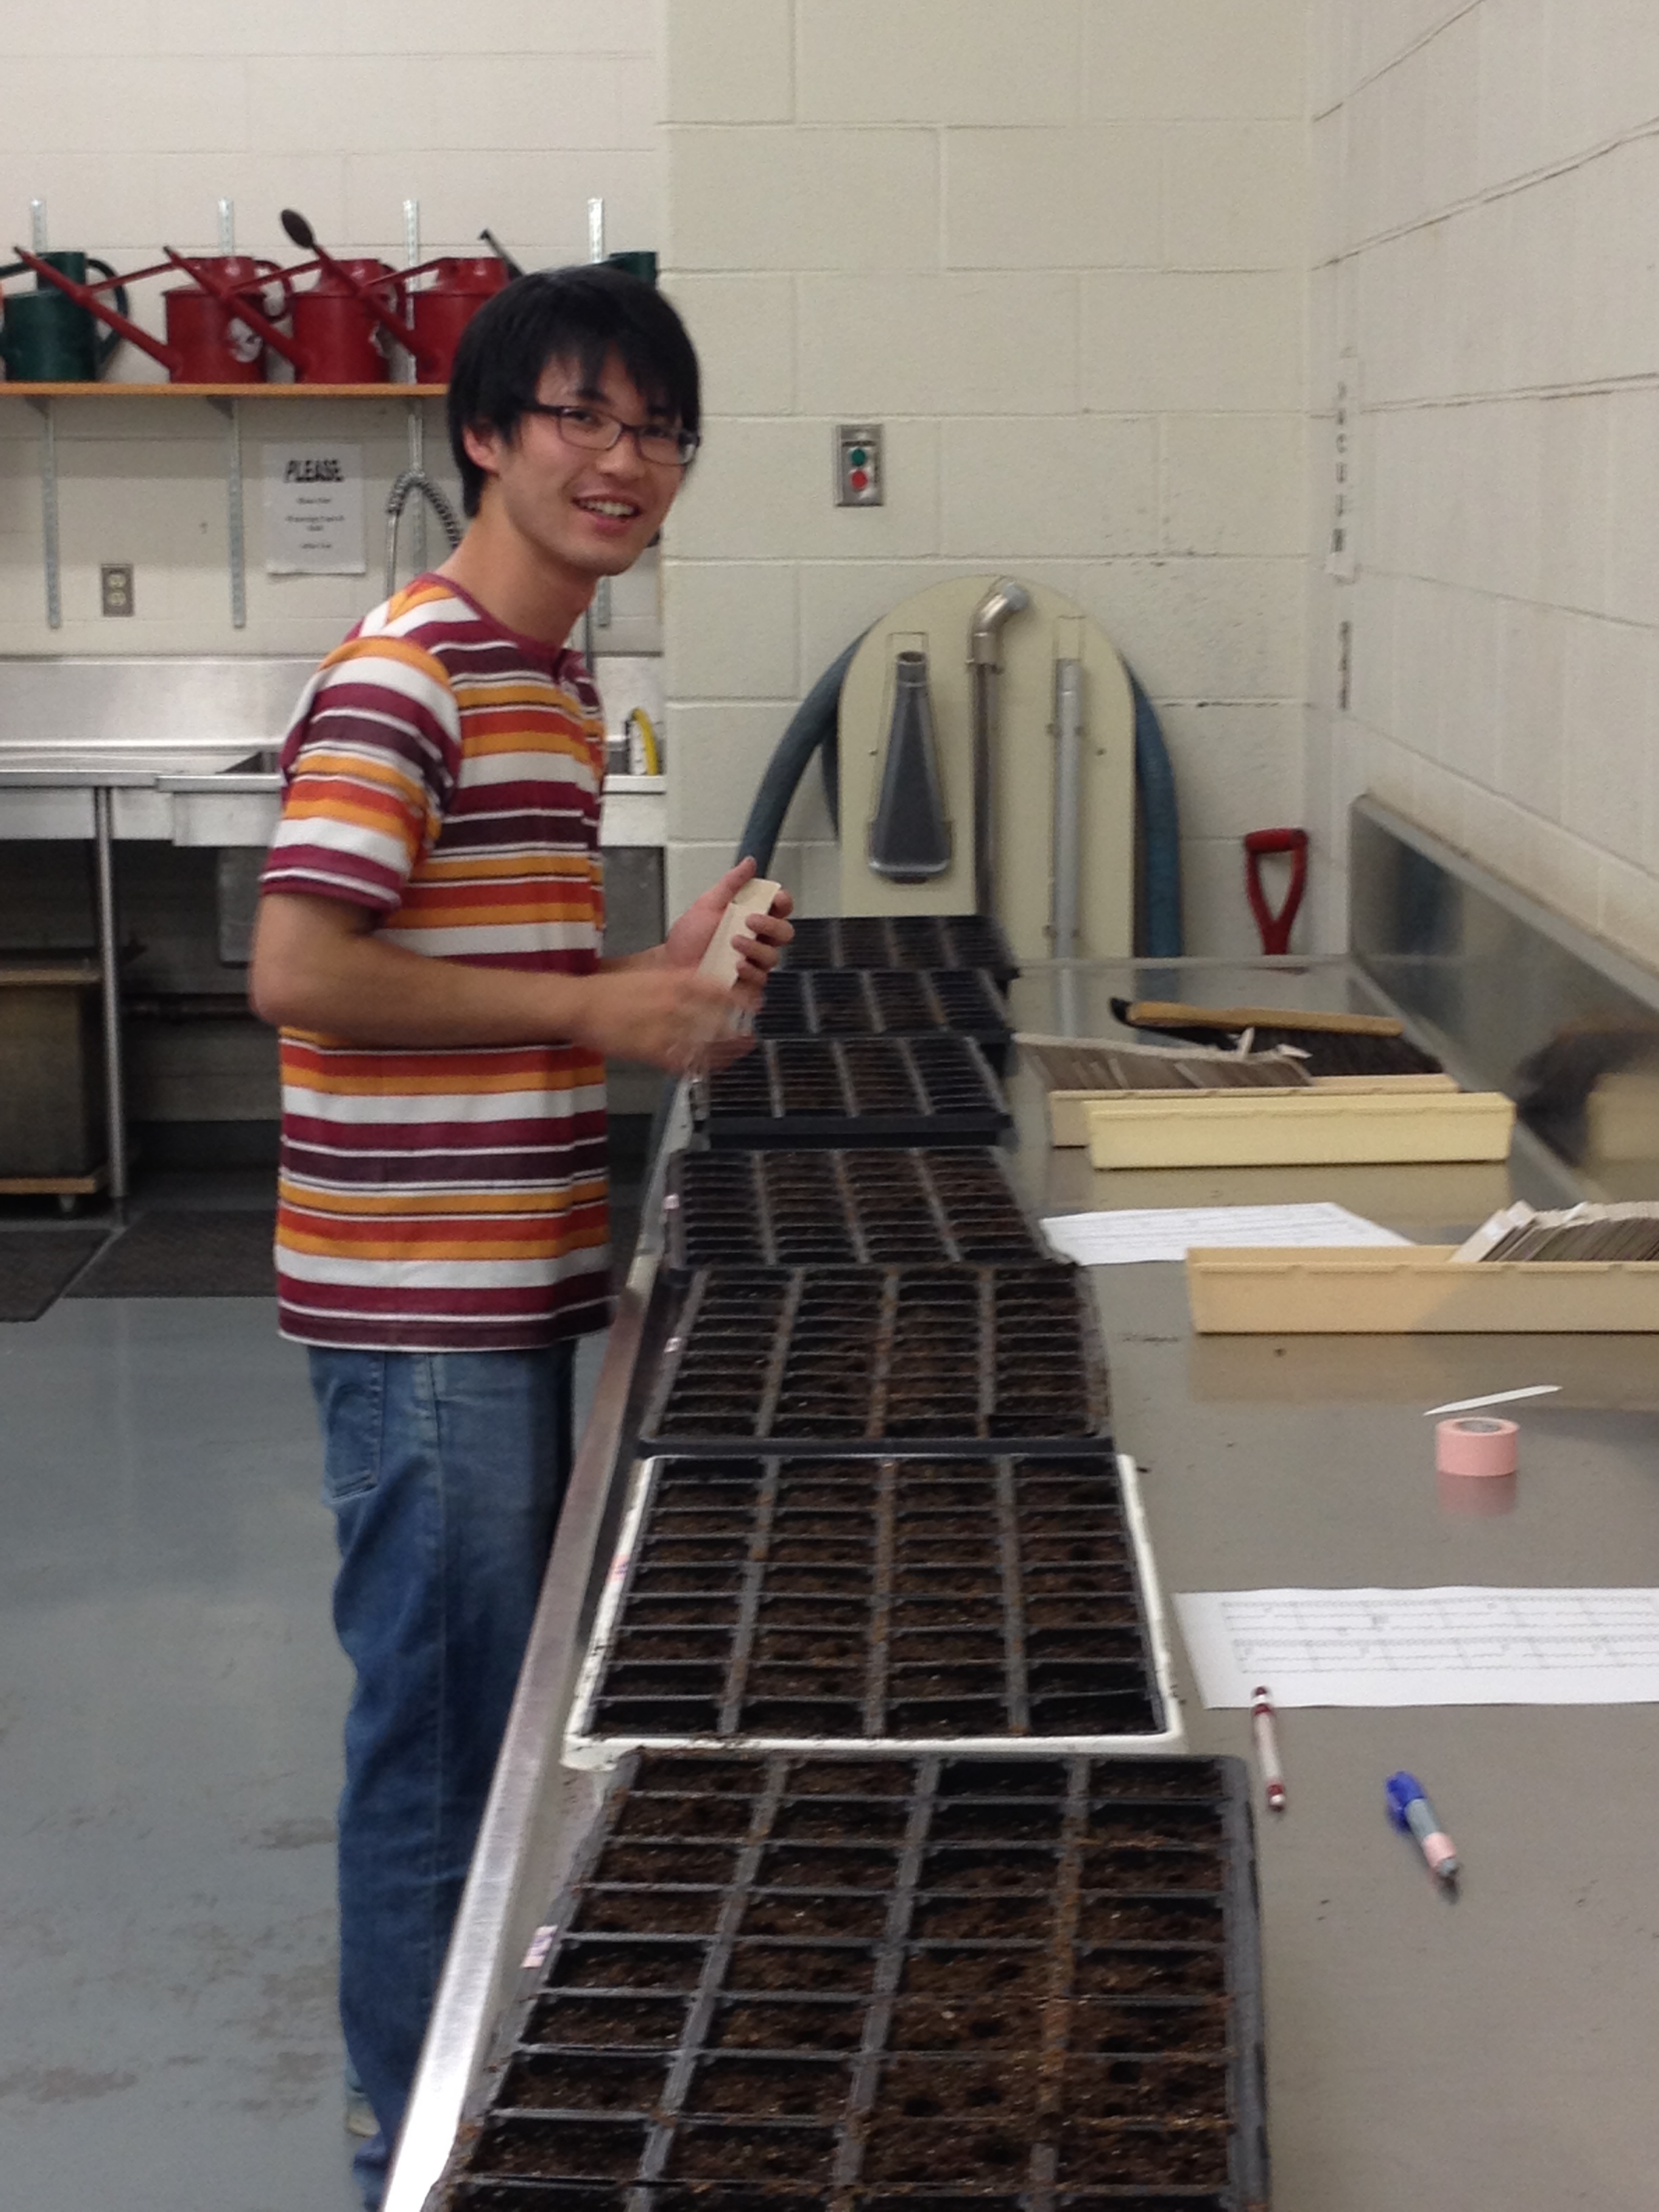 Teruki filling seed trays